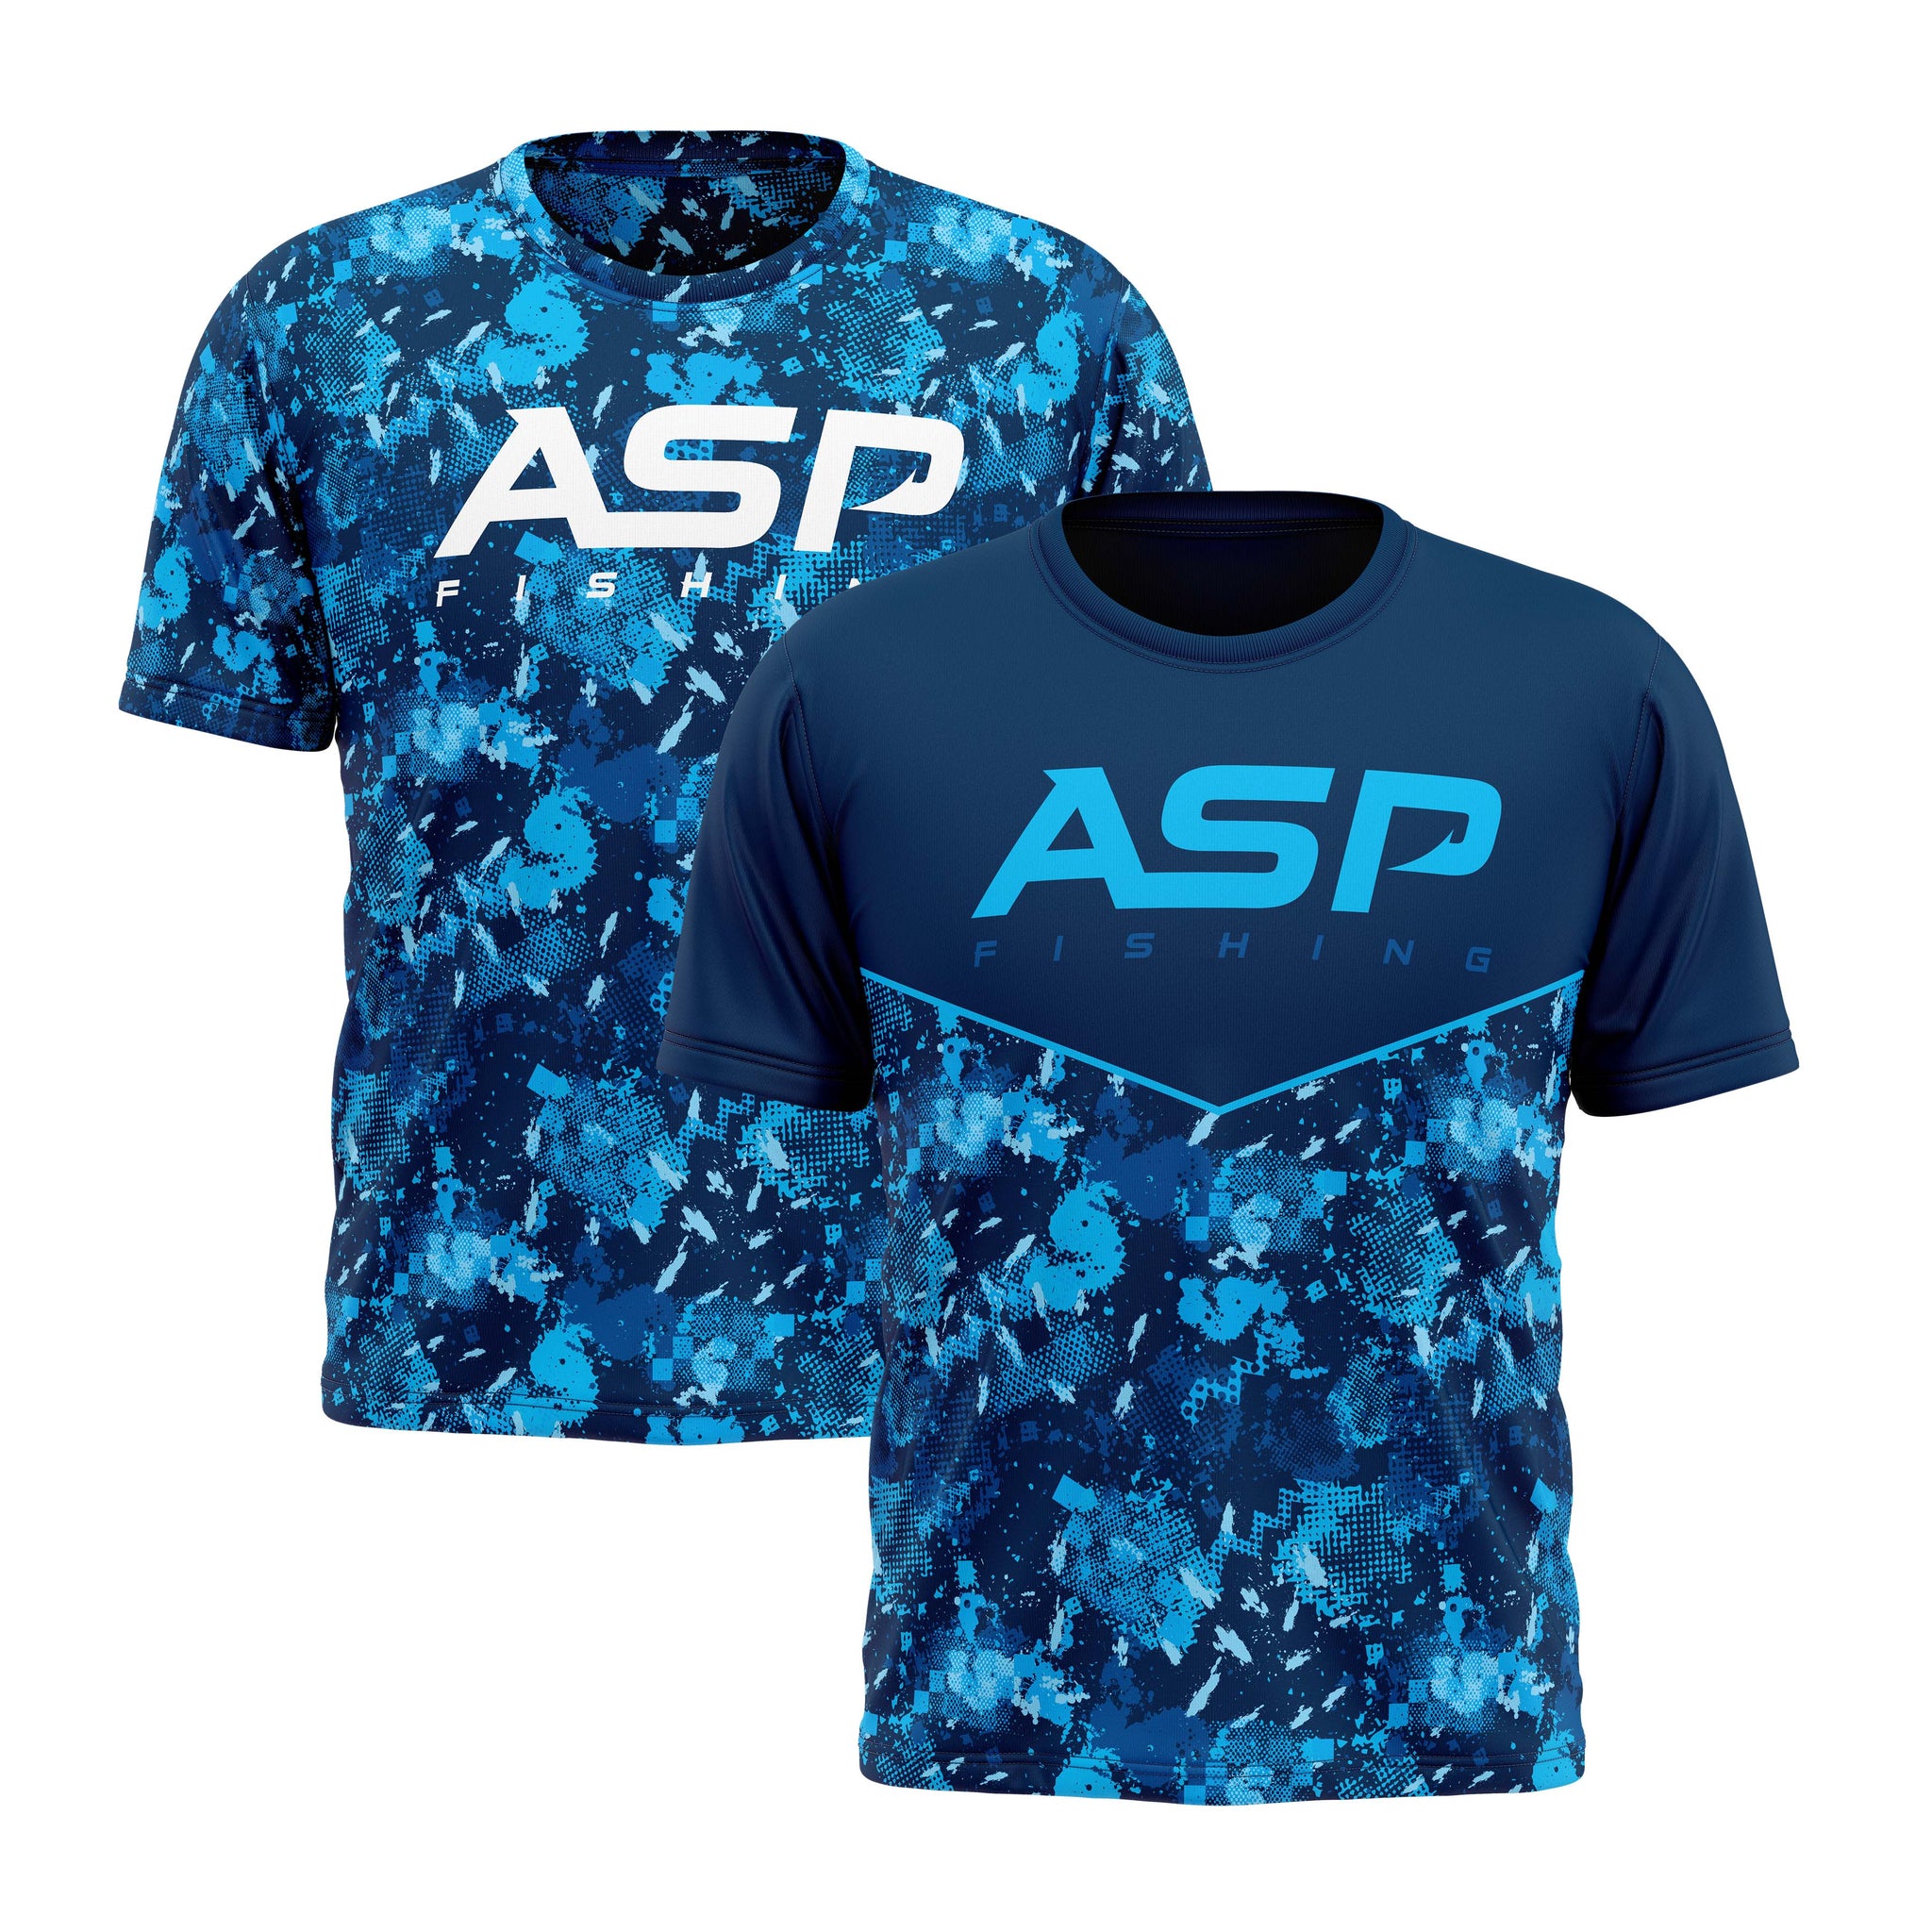 ASP Angler Series Short Sleeve